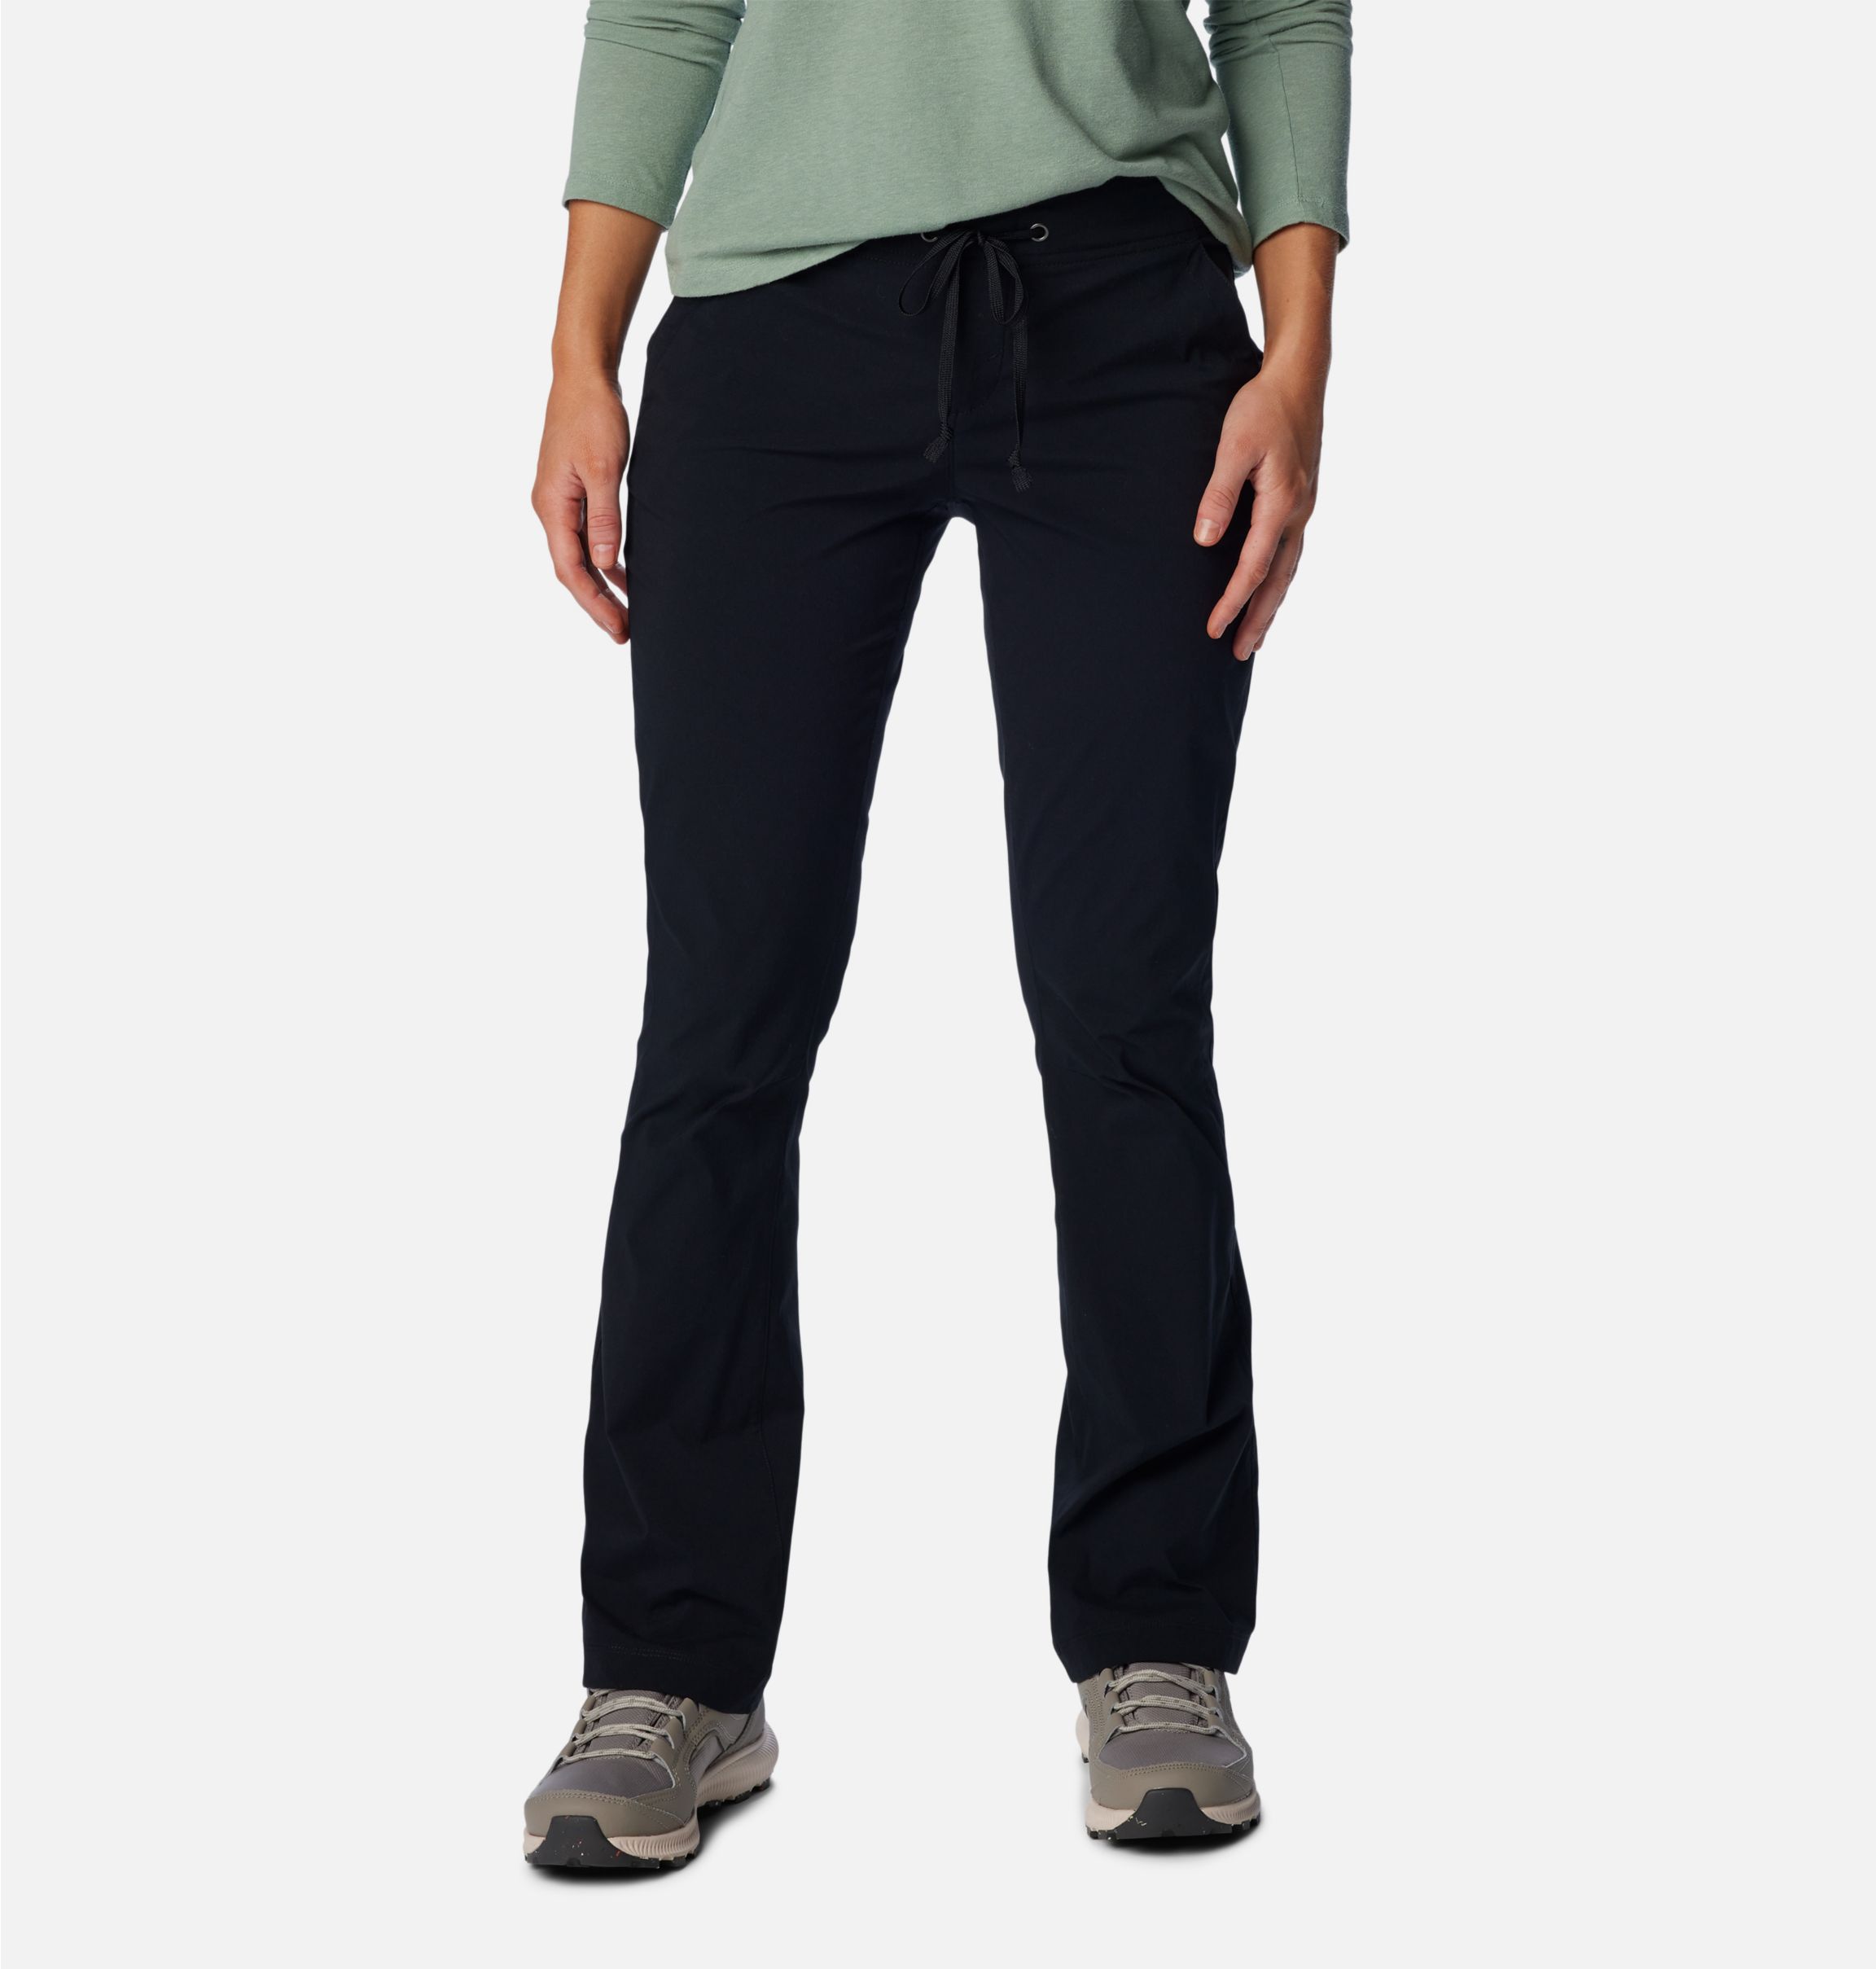 Sweatpants for Women Knee Length Capri Jogger Pants with Zipper Pockets  Drawstring Loose Casual Workout Sportwear (Large, Gray)